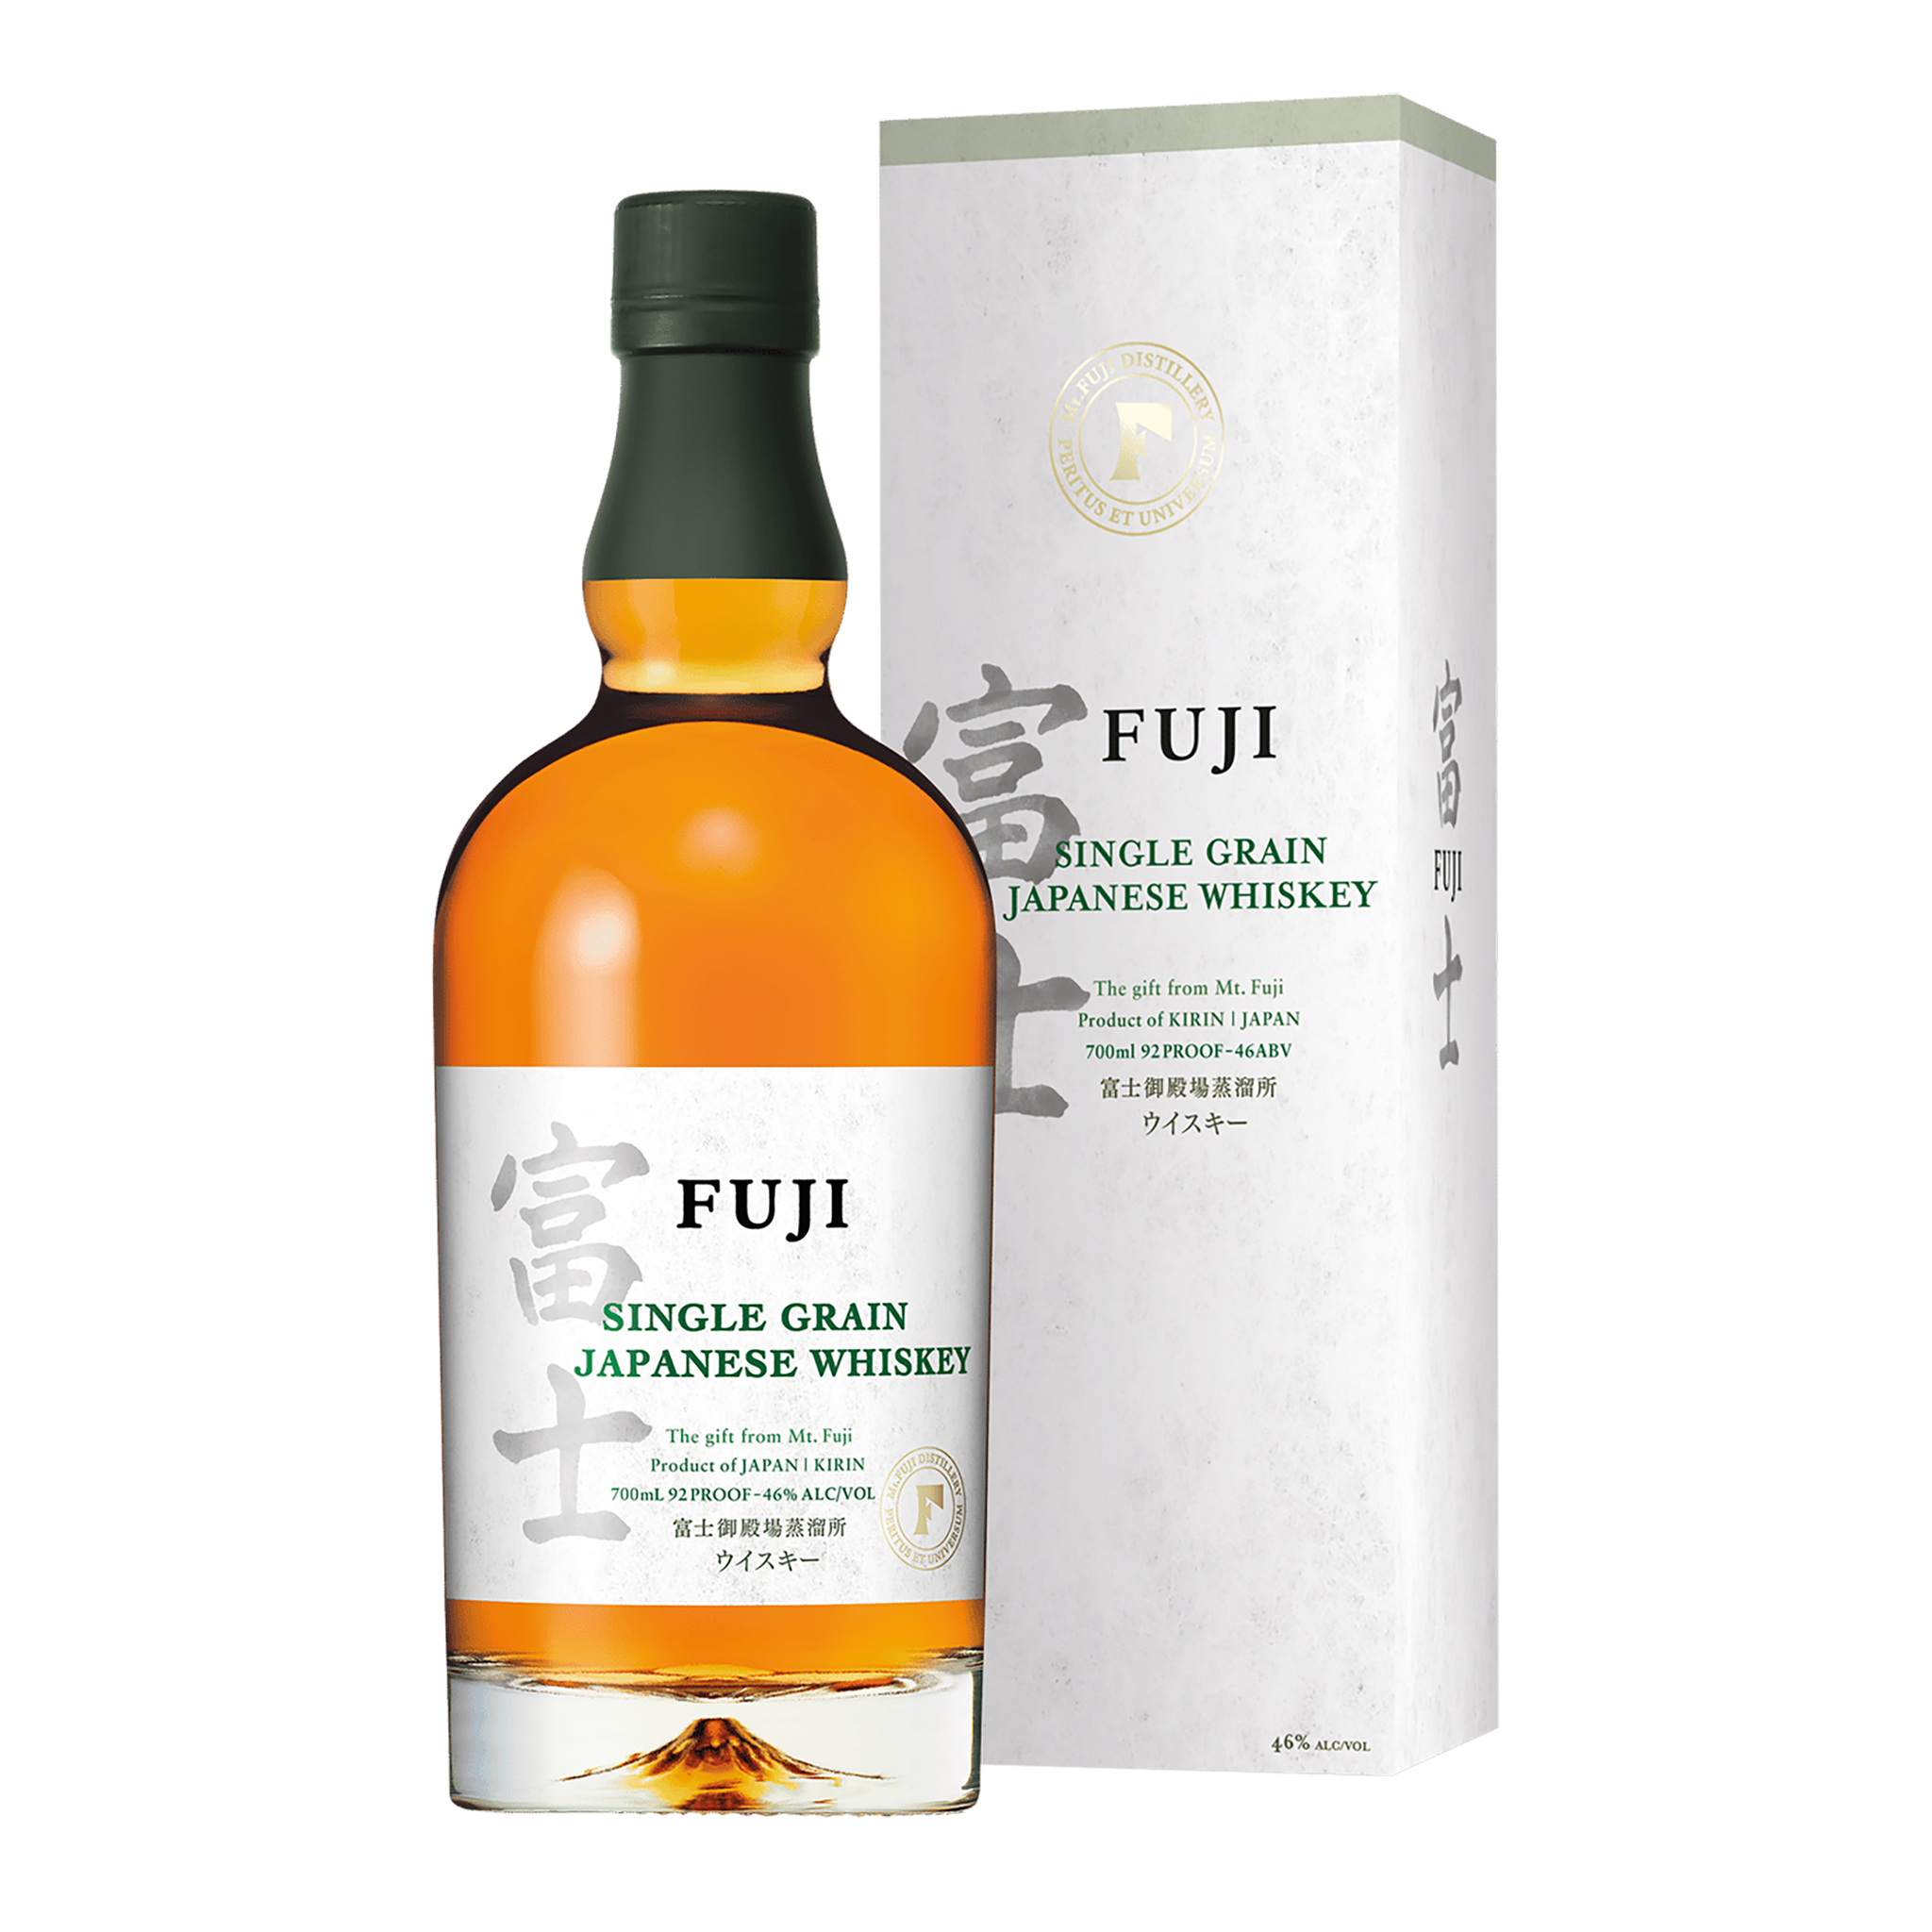 Whisky japonais - Fuji Blended